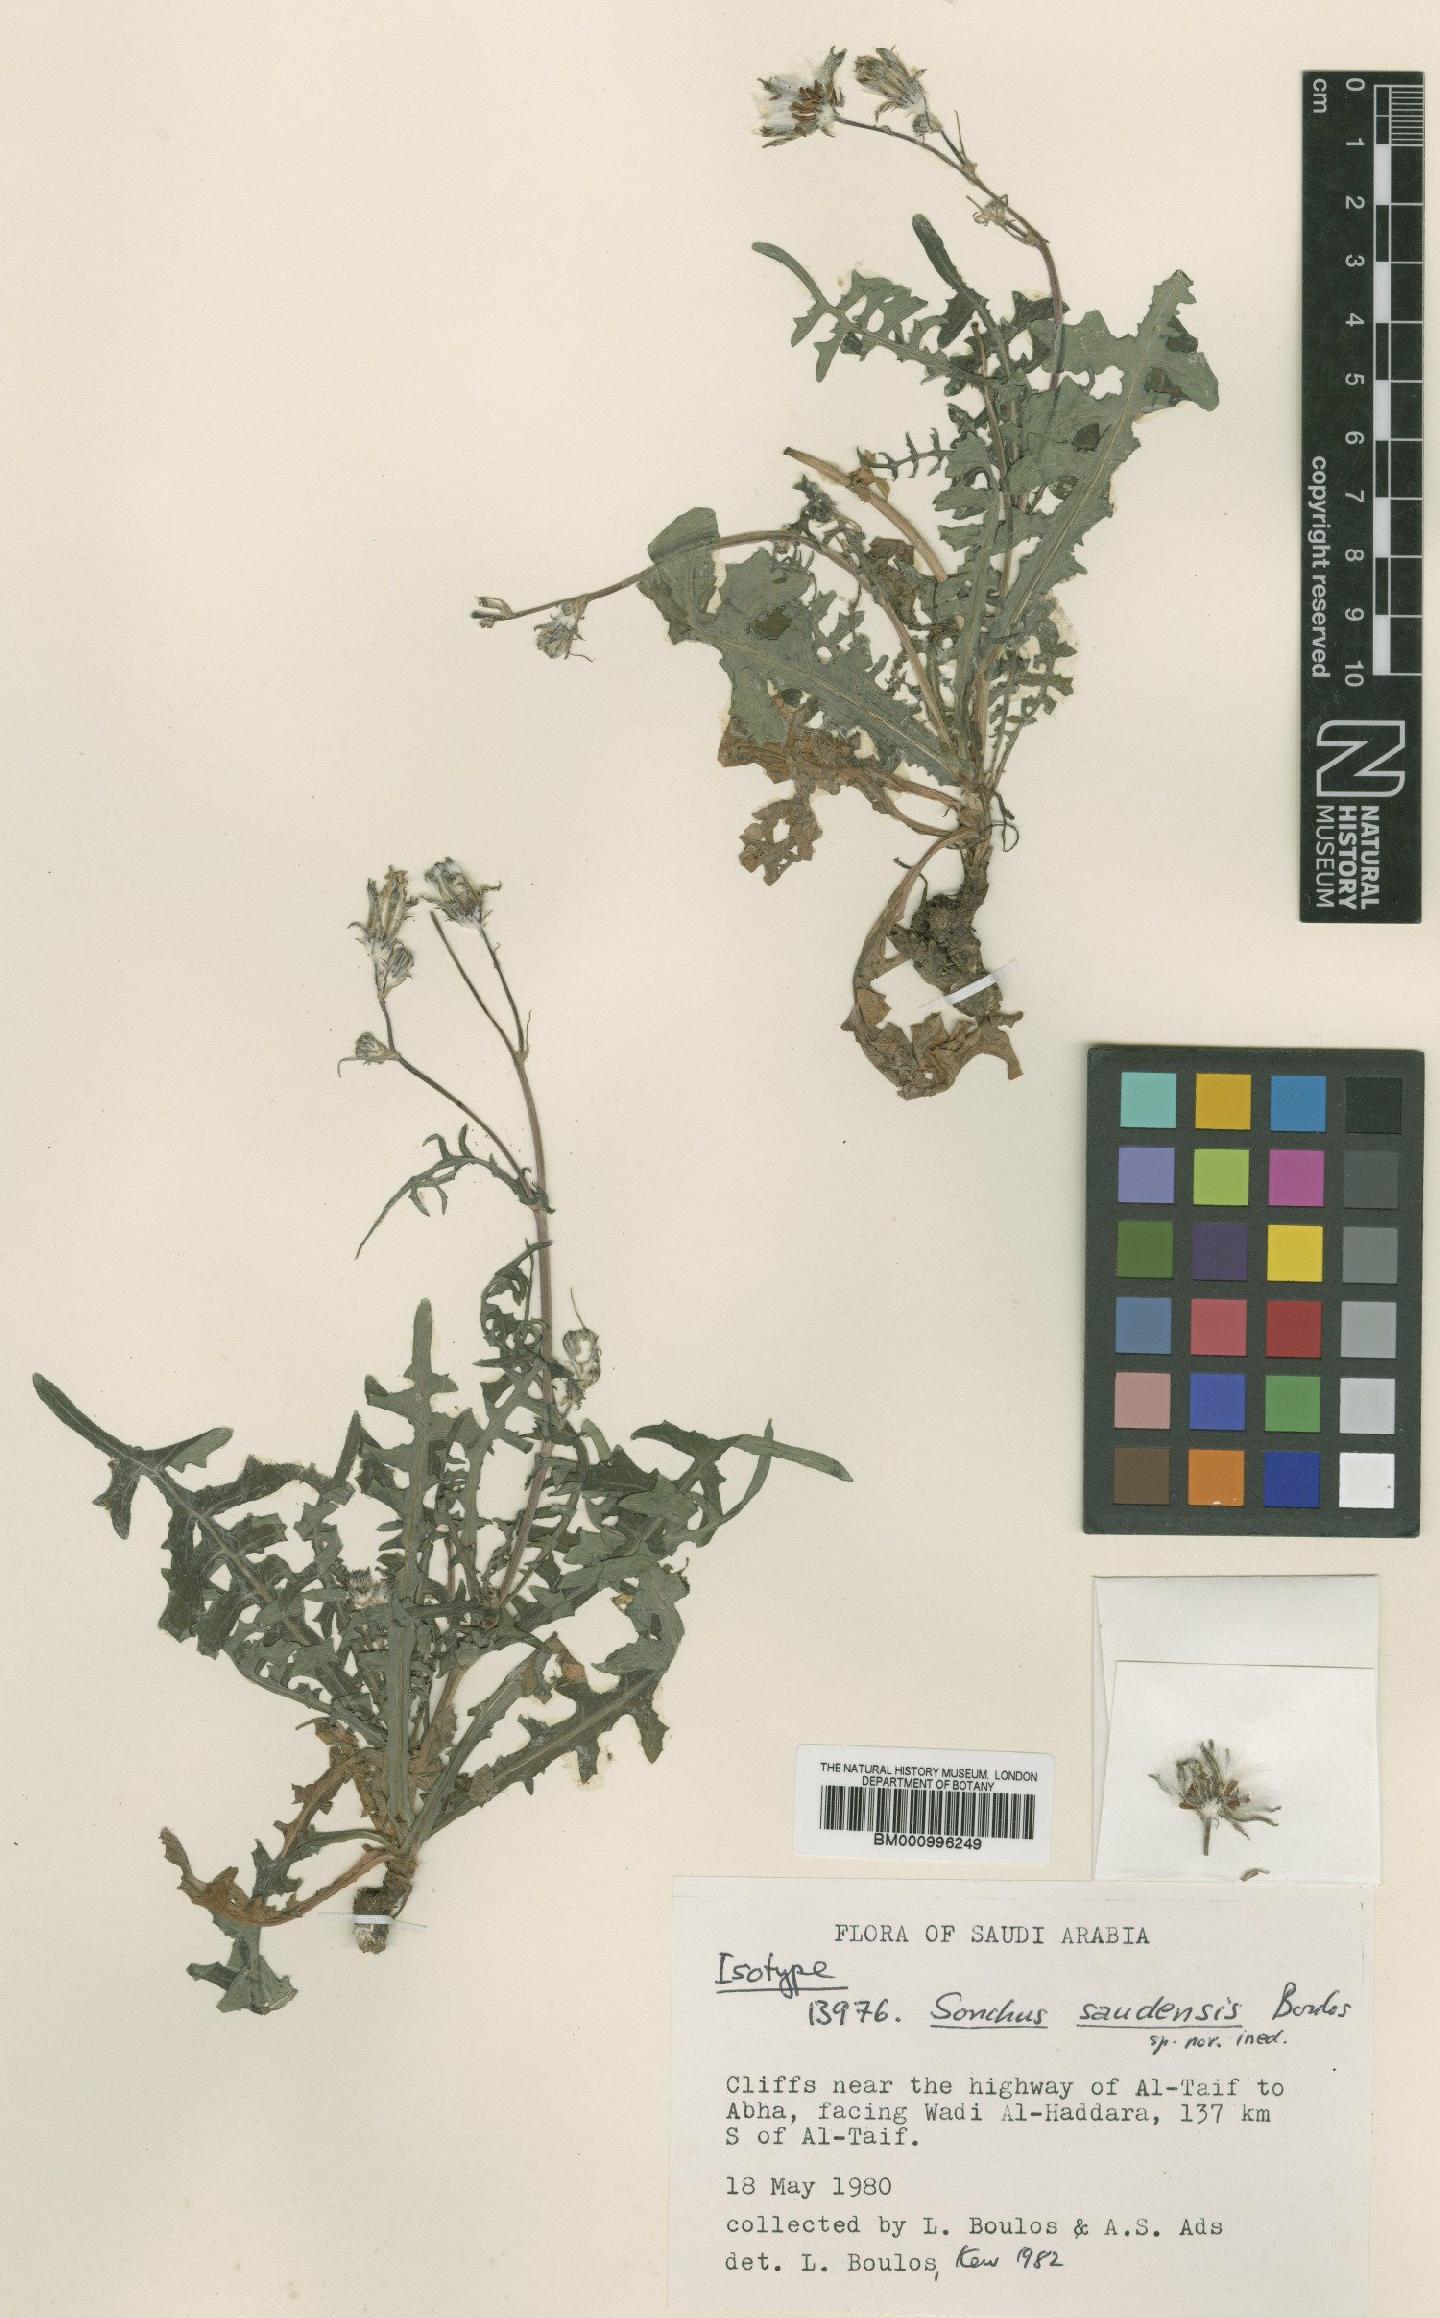 To NHMUK collection (Sonchus saudensis Boulos; Type; NHMUK:ecatalogue:480693)